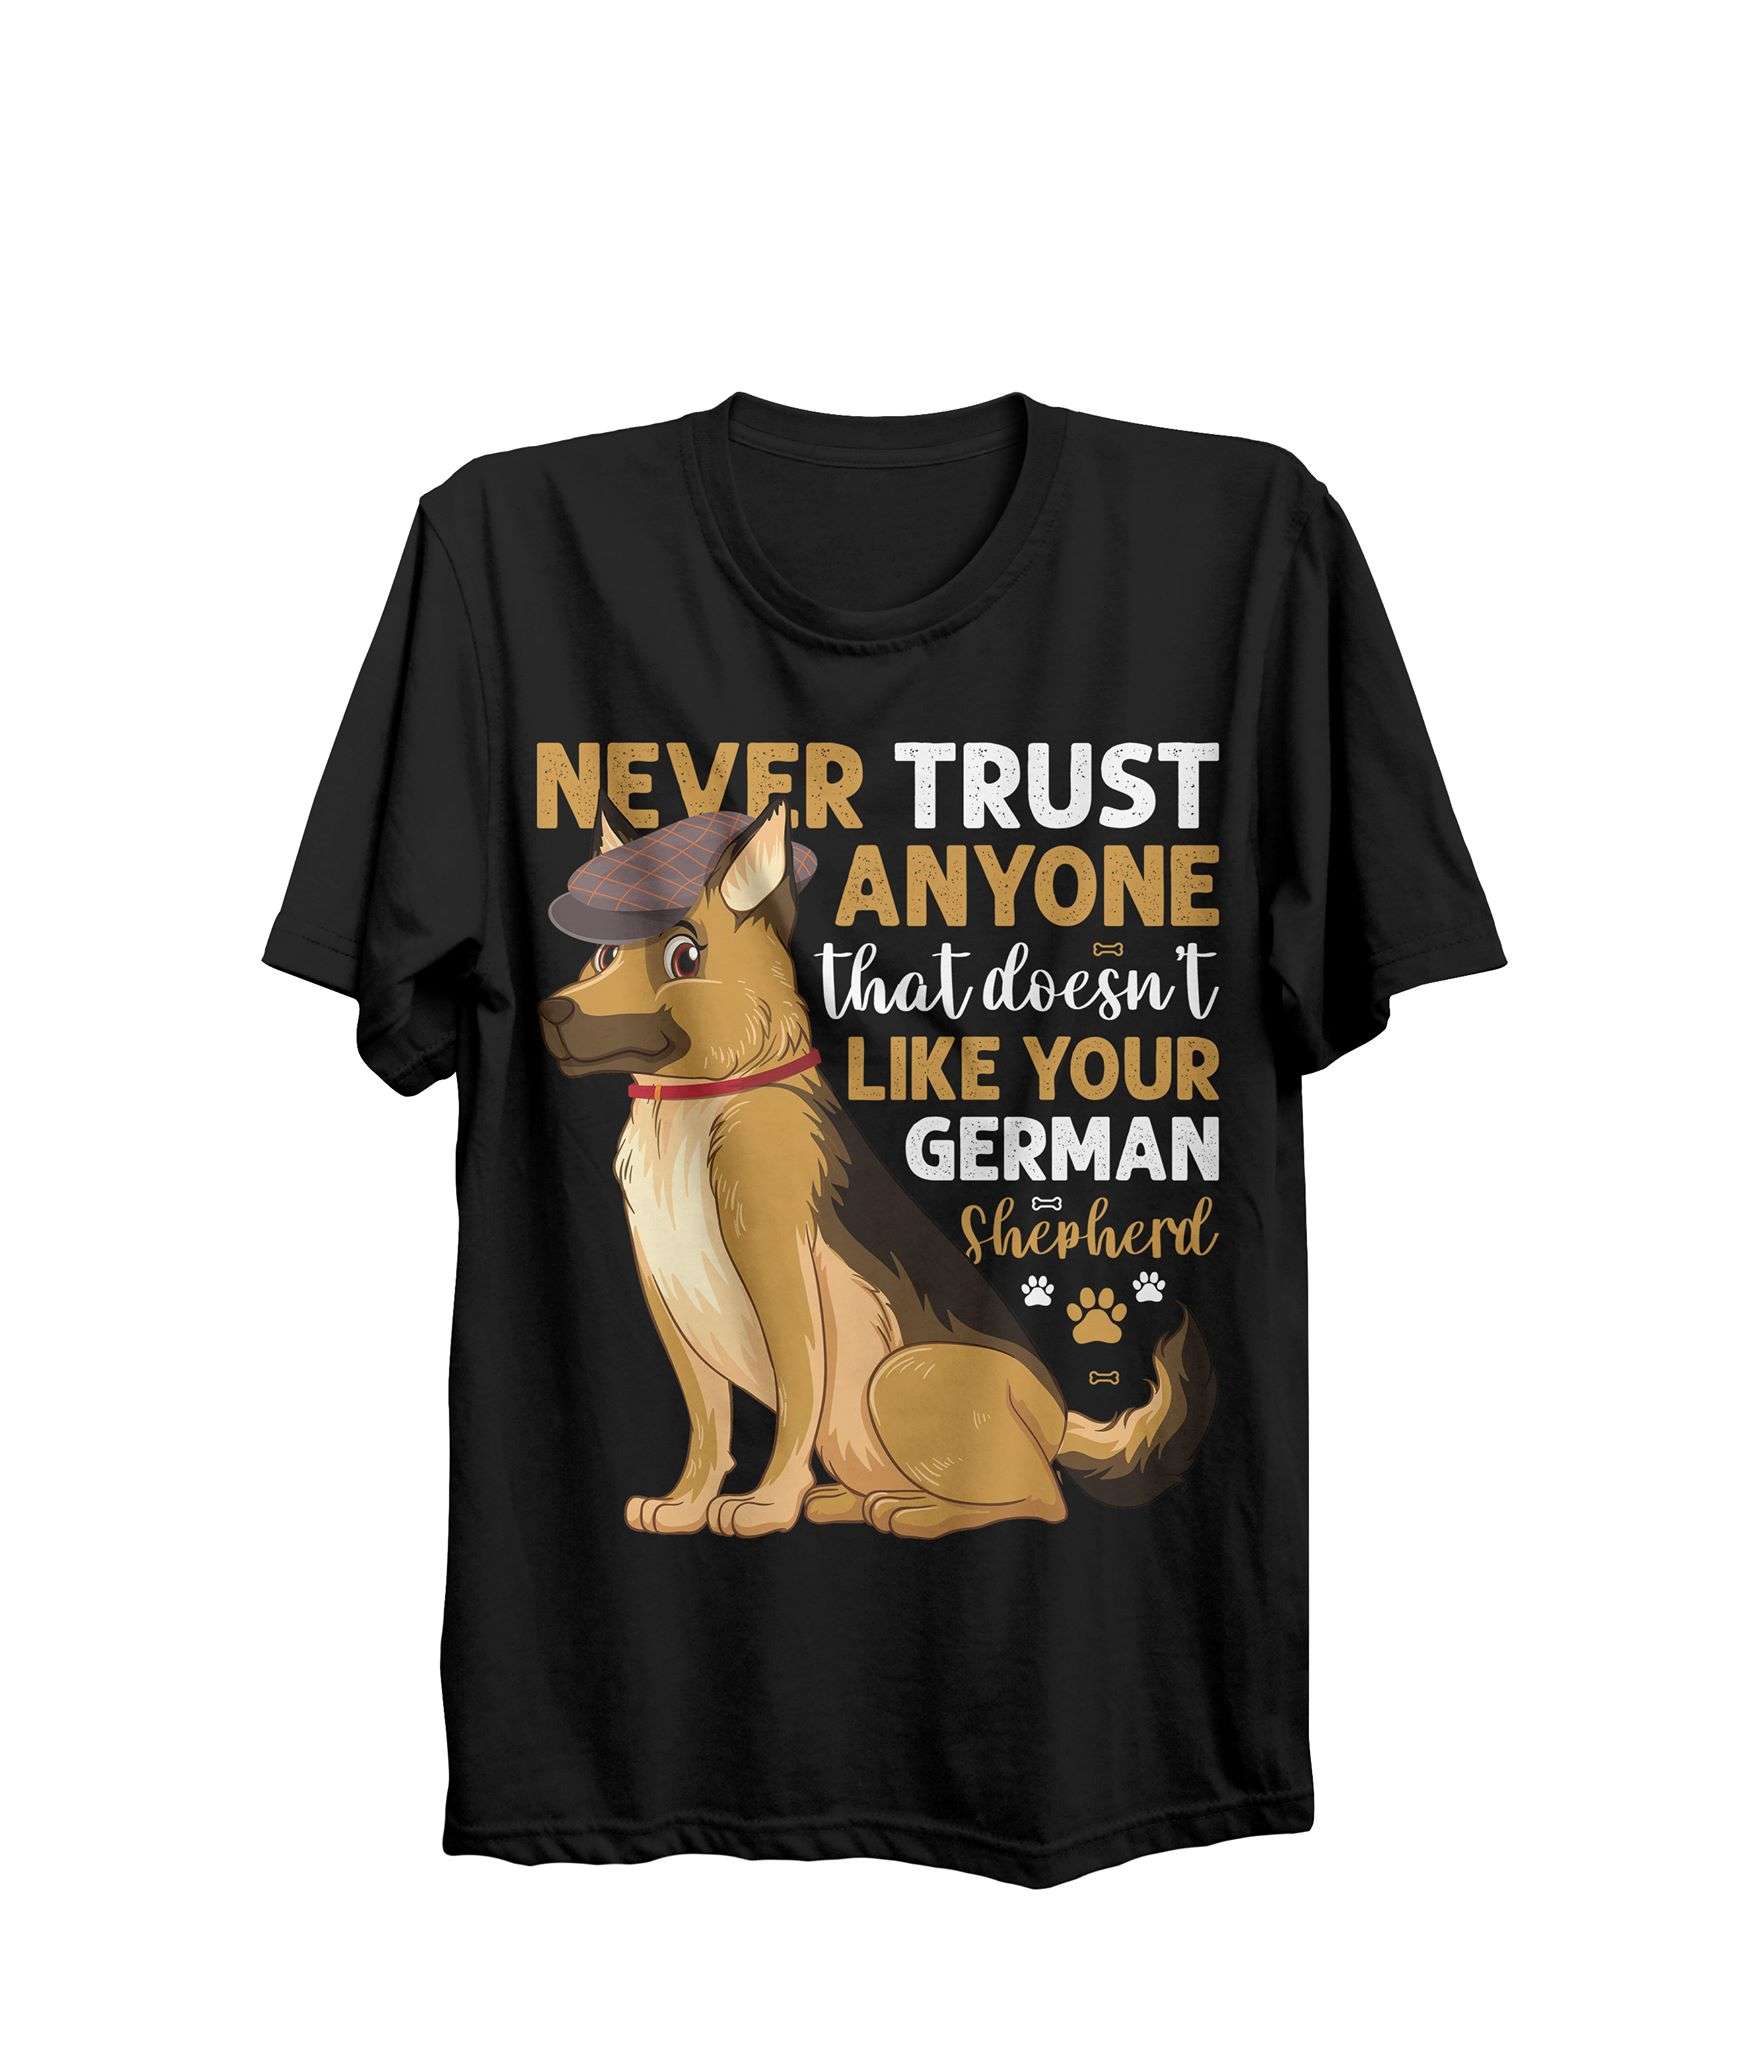 Gentleman German Shepherd - Never trust anyone that doesn't like your german shepherd